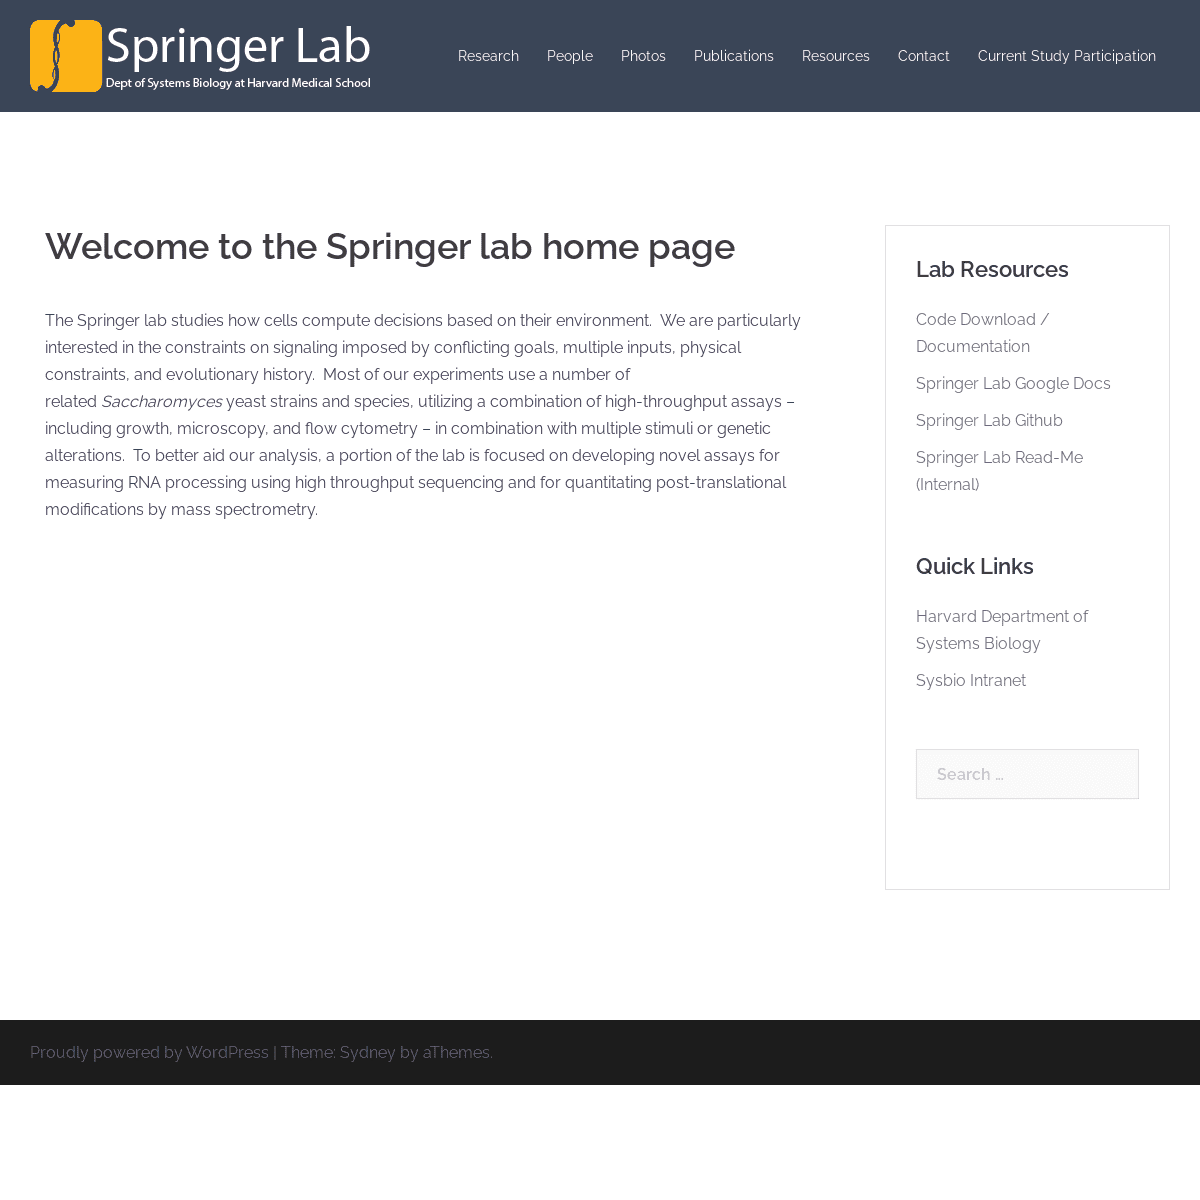 A complete backup of https://springerlab.org